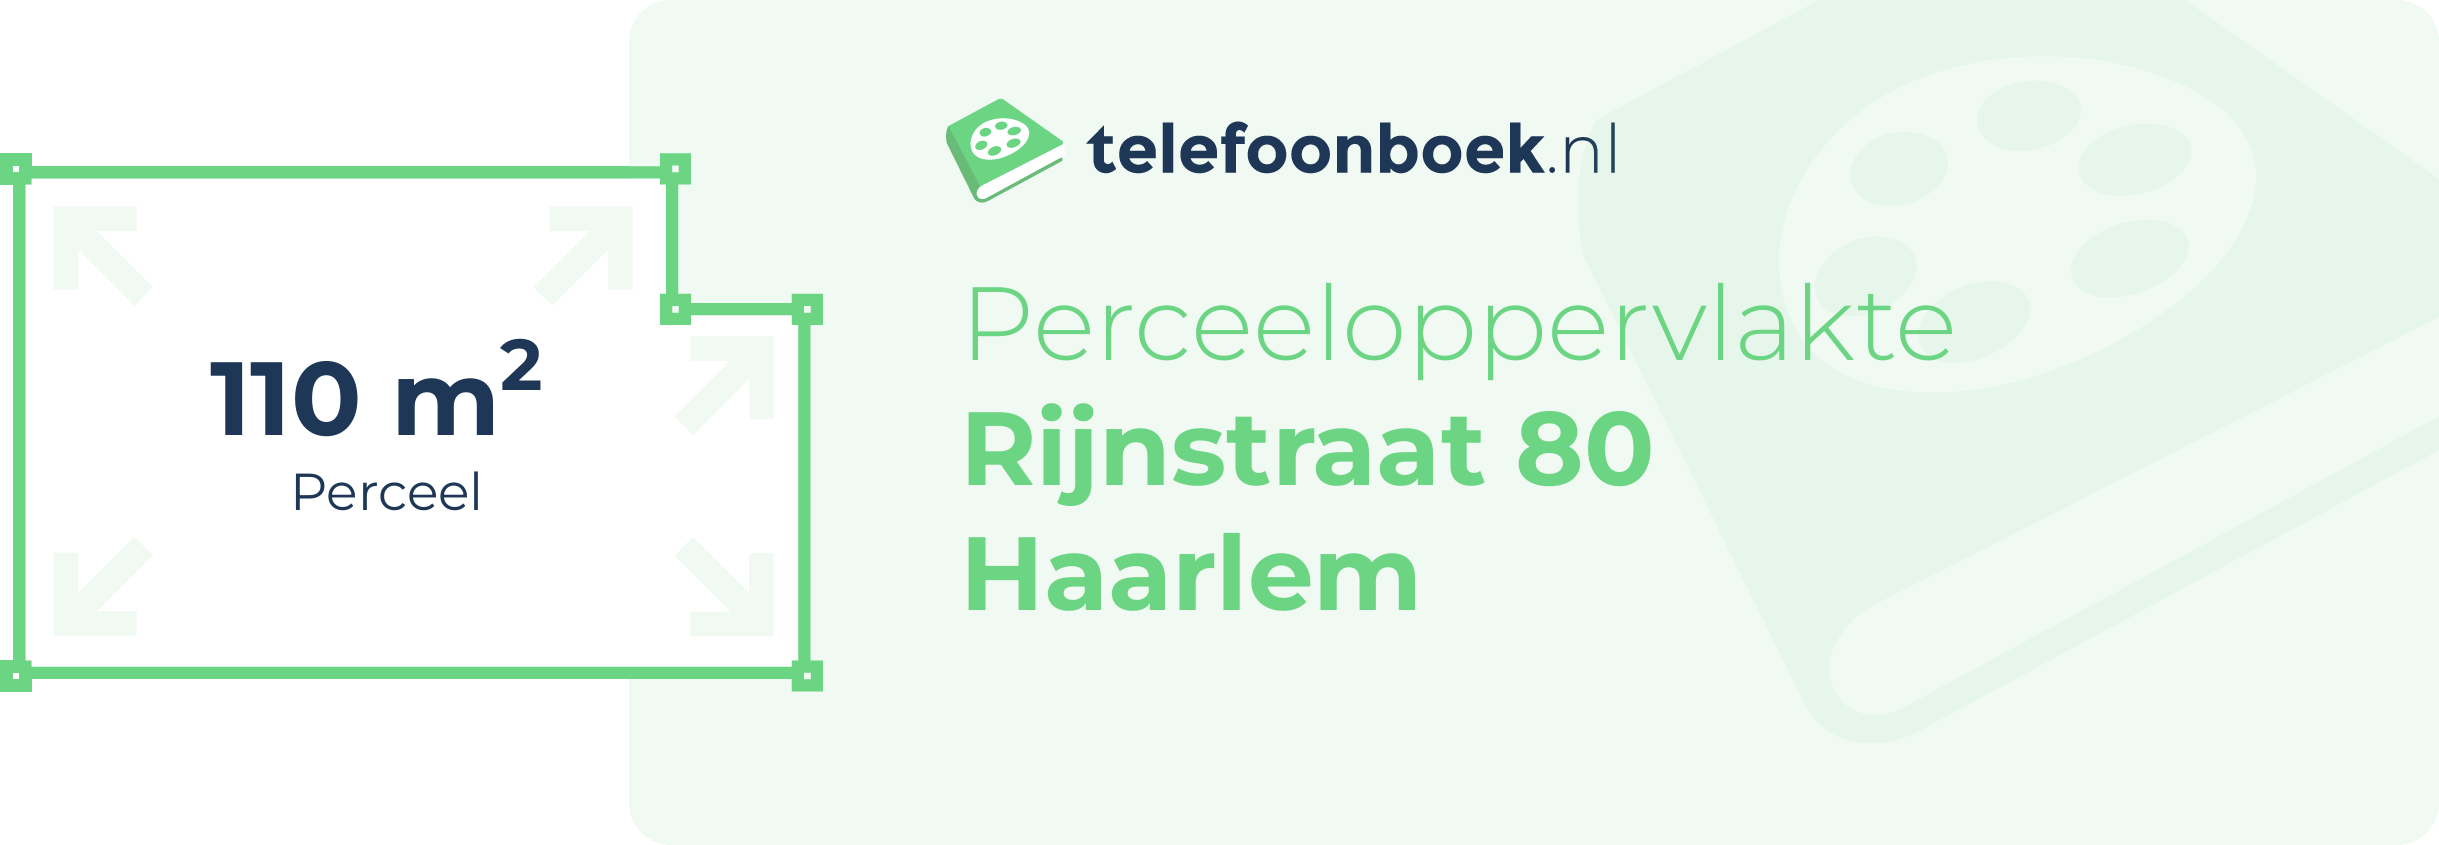 Perceeloppervlakte Rijnstraat 80 Haarlem